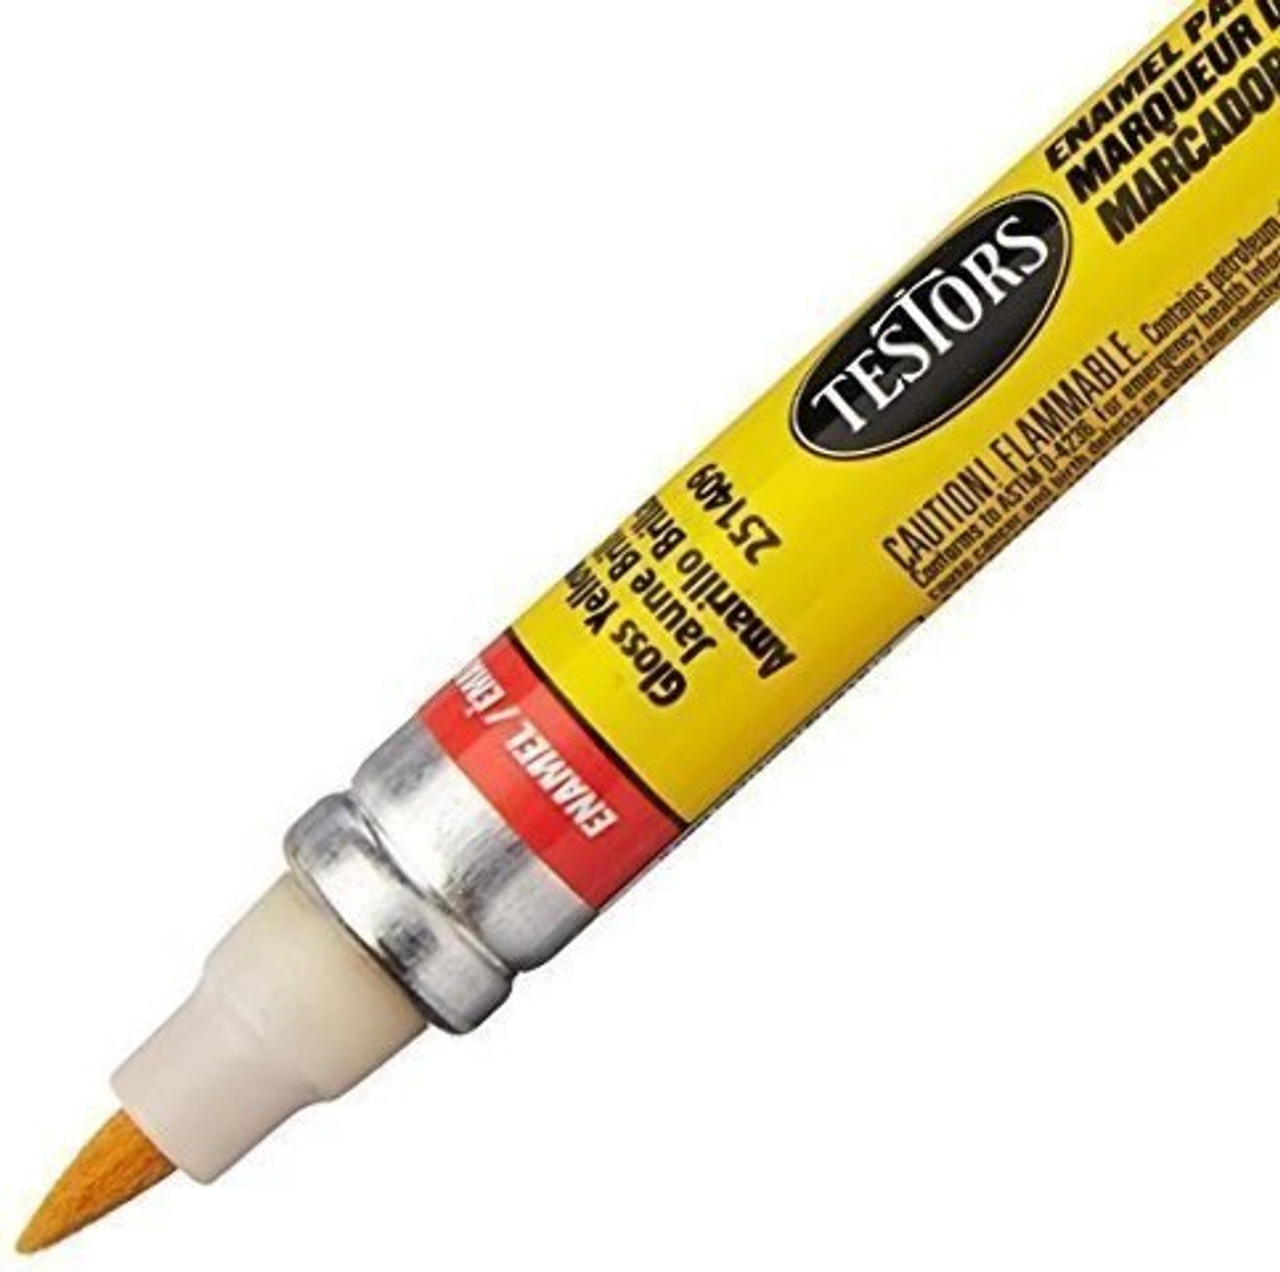 Testors Enamel Paint Marker-Gloss Yellow - Crazy Model Trains